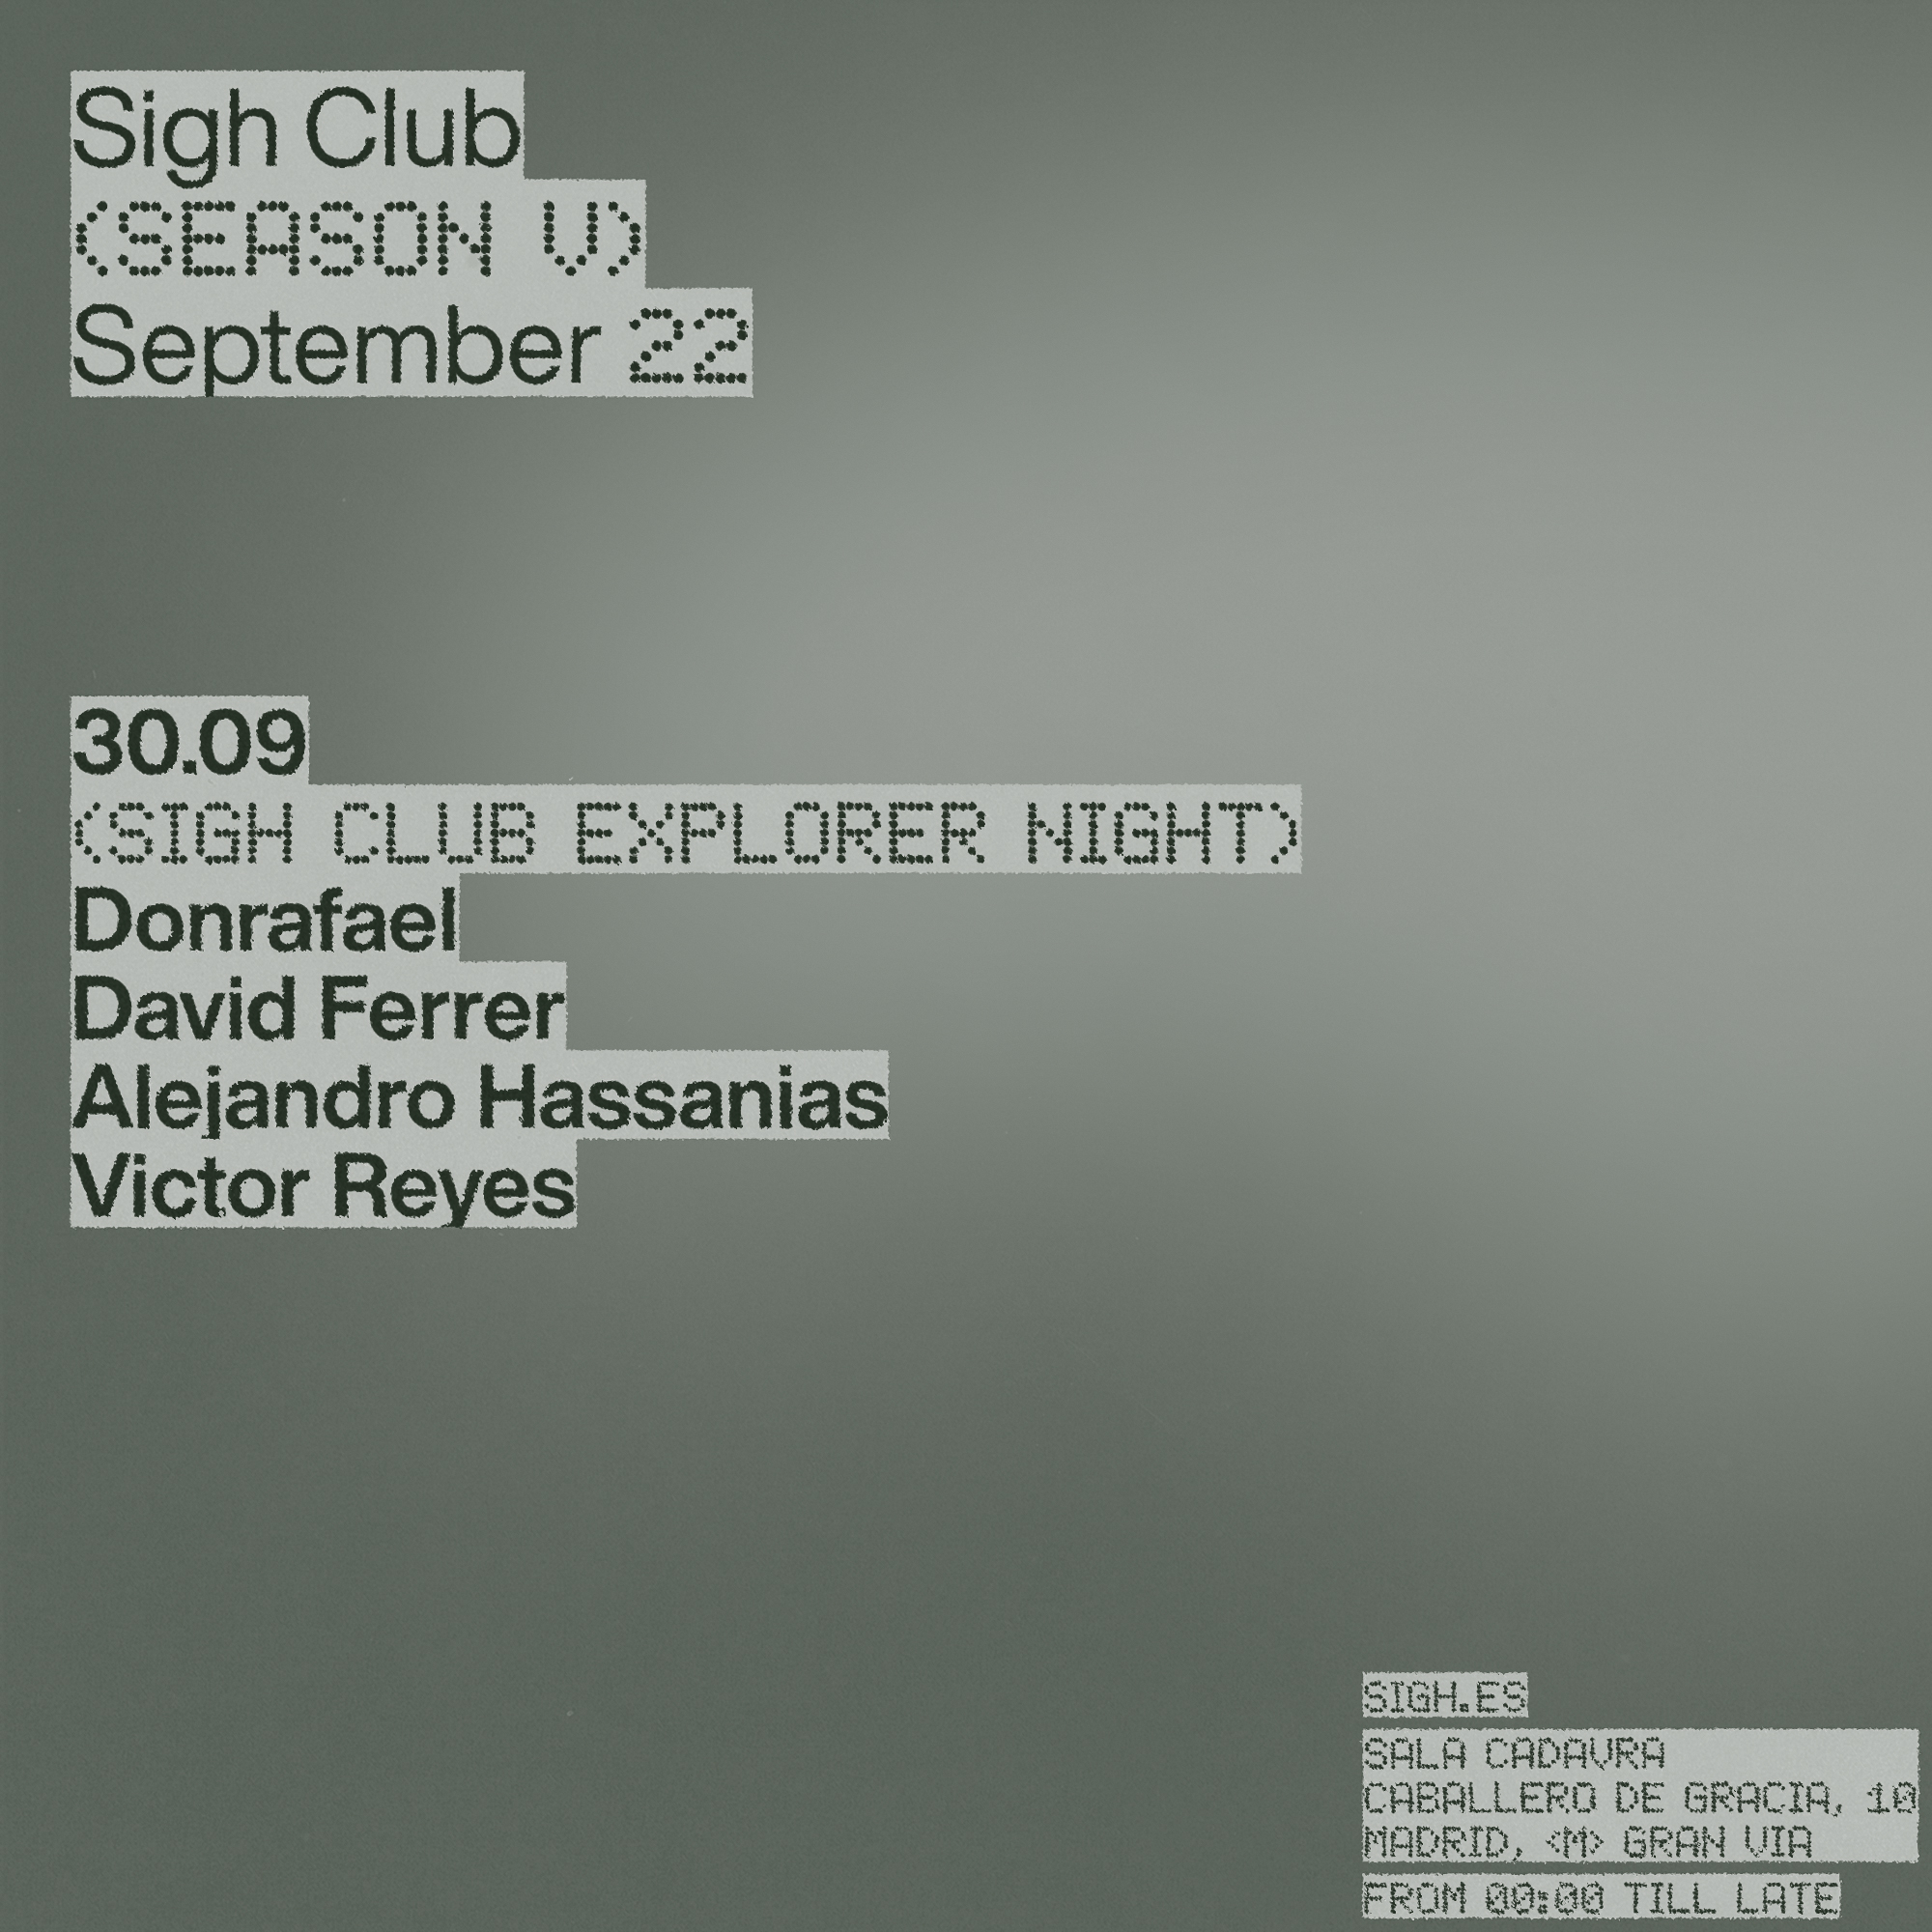 Sigh Club Explorer Night - Cara Flyer